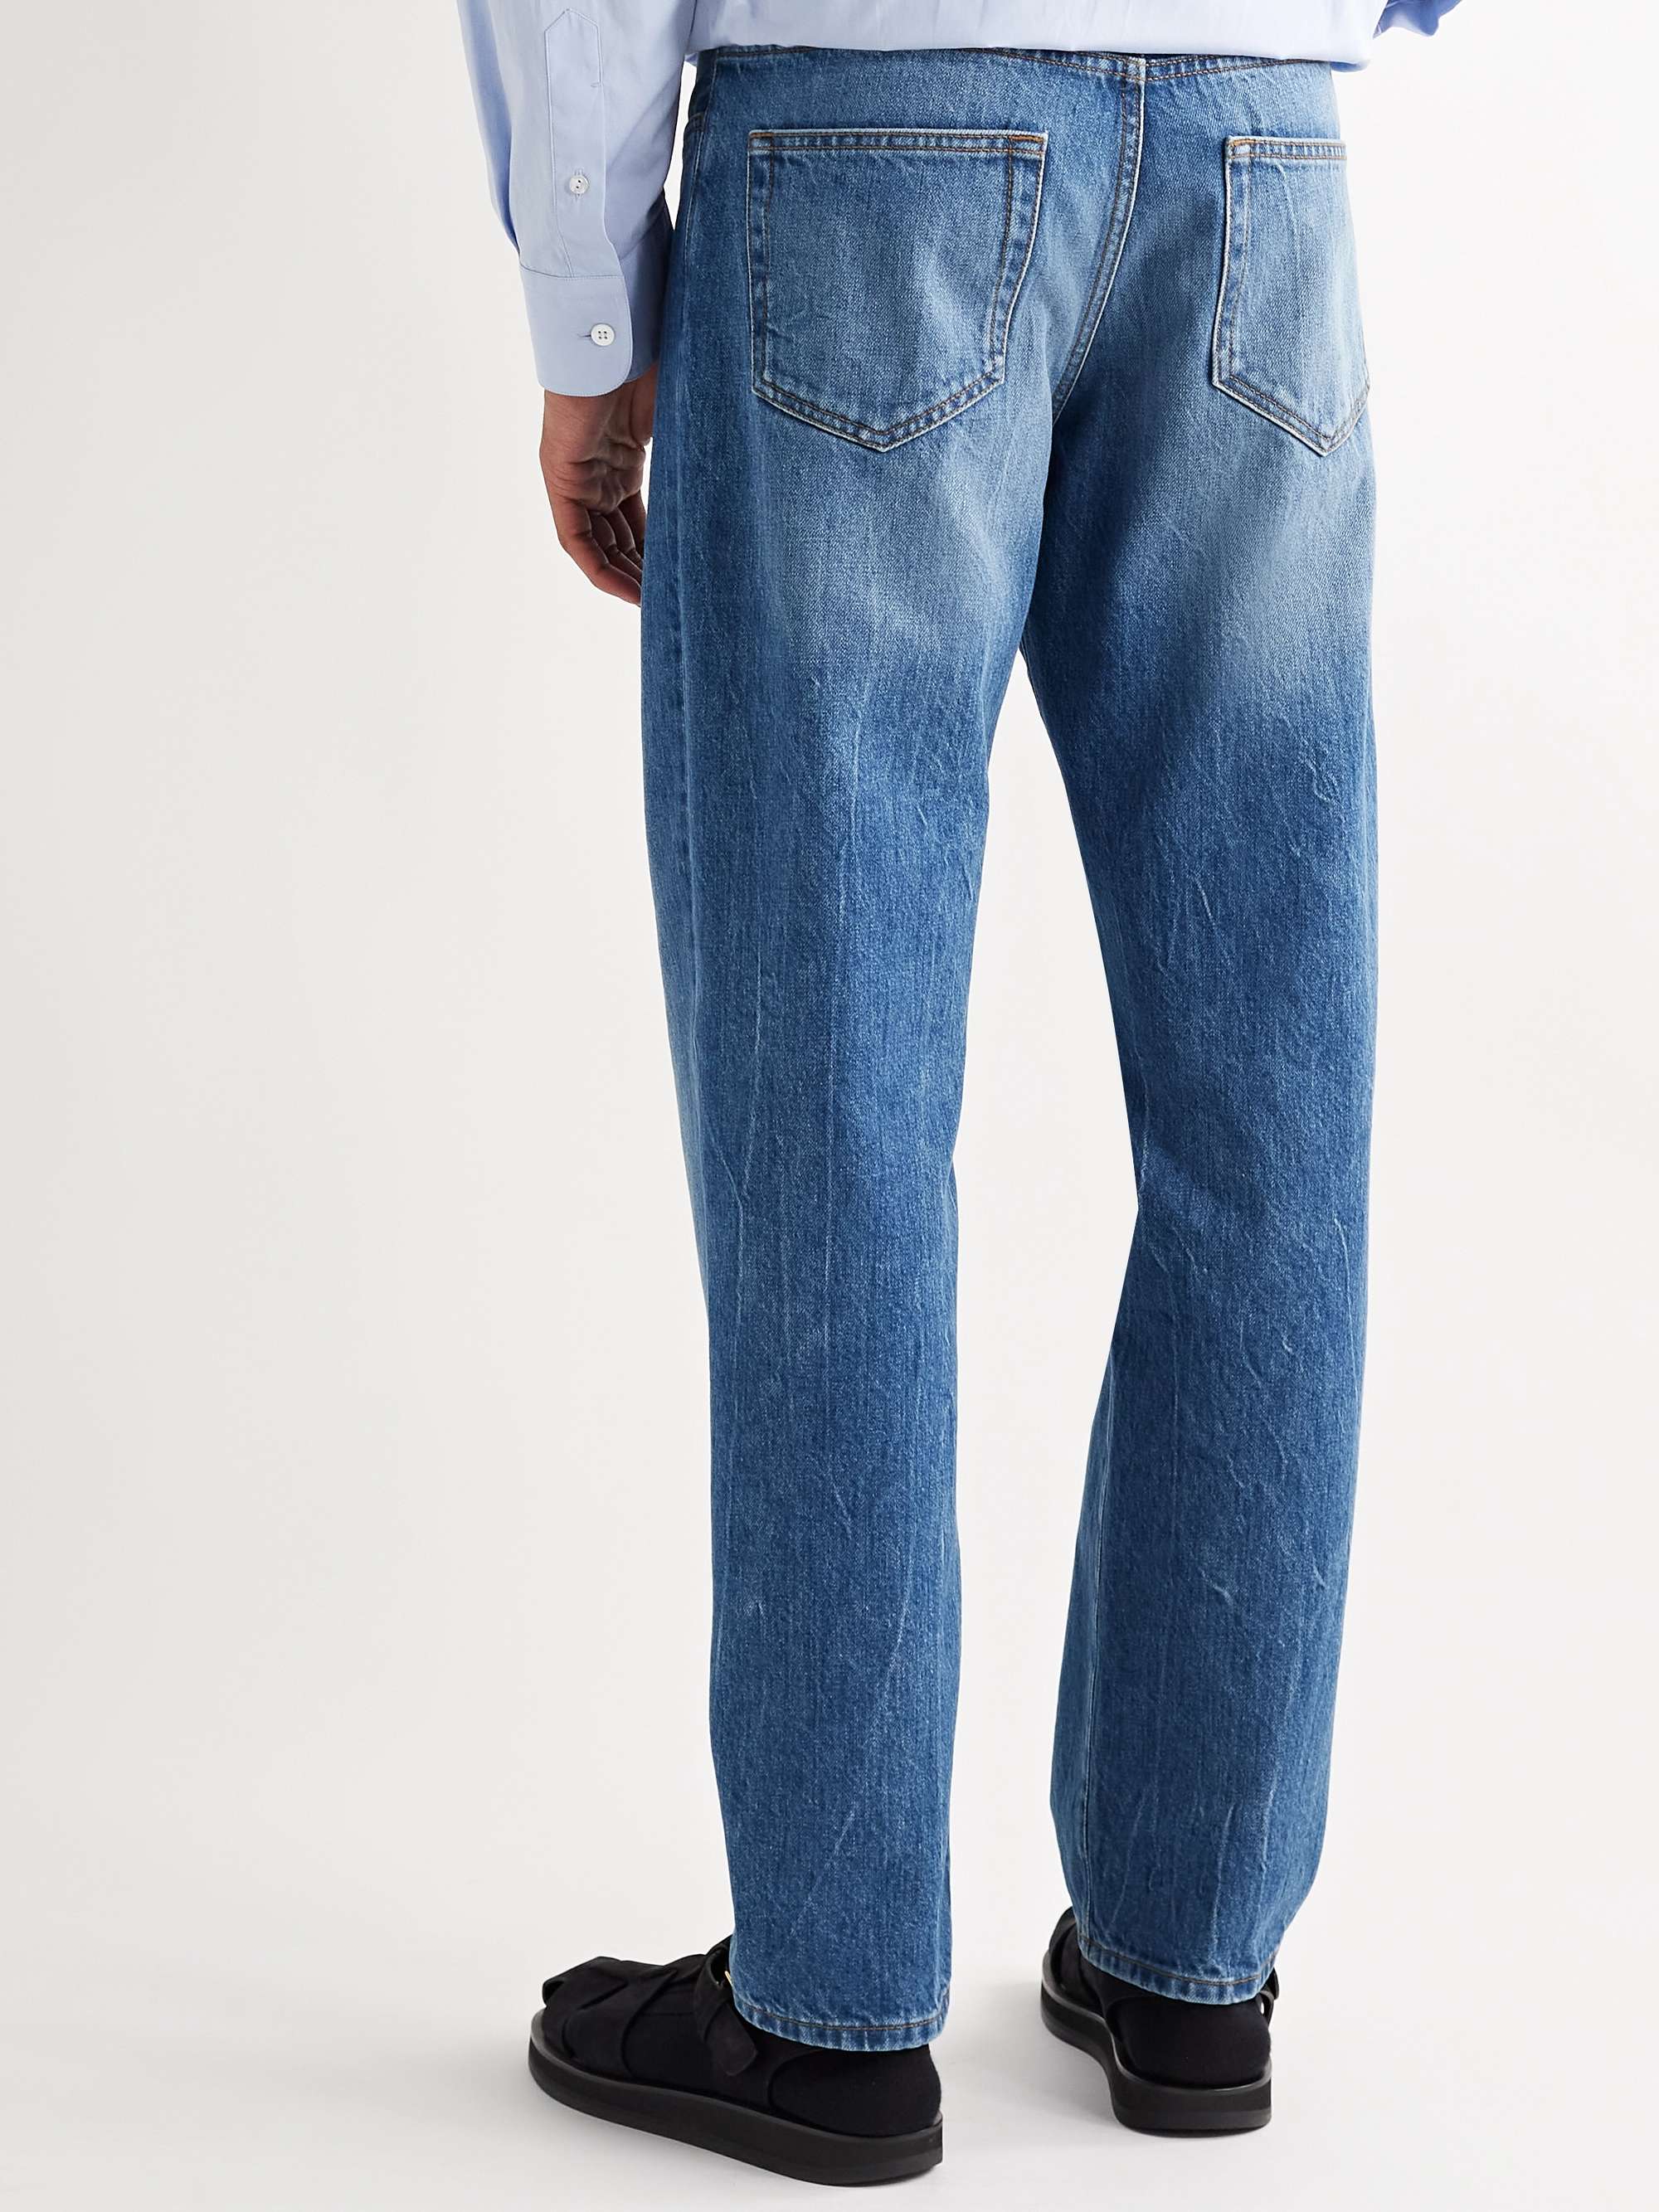 THE ROW Monroe Jeans | MR PORTER